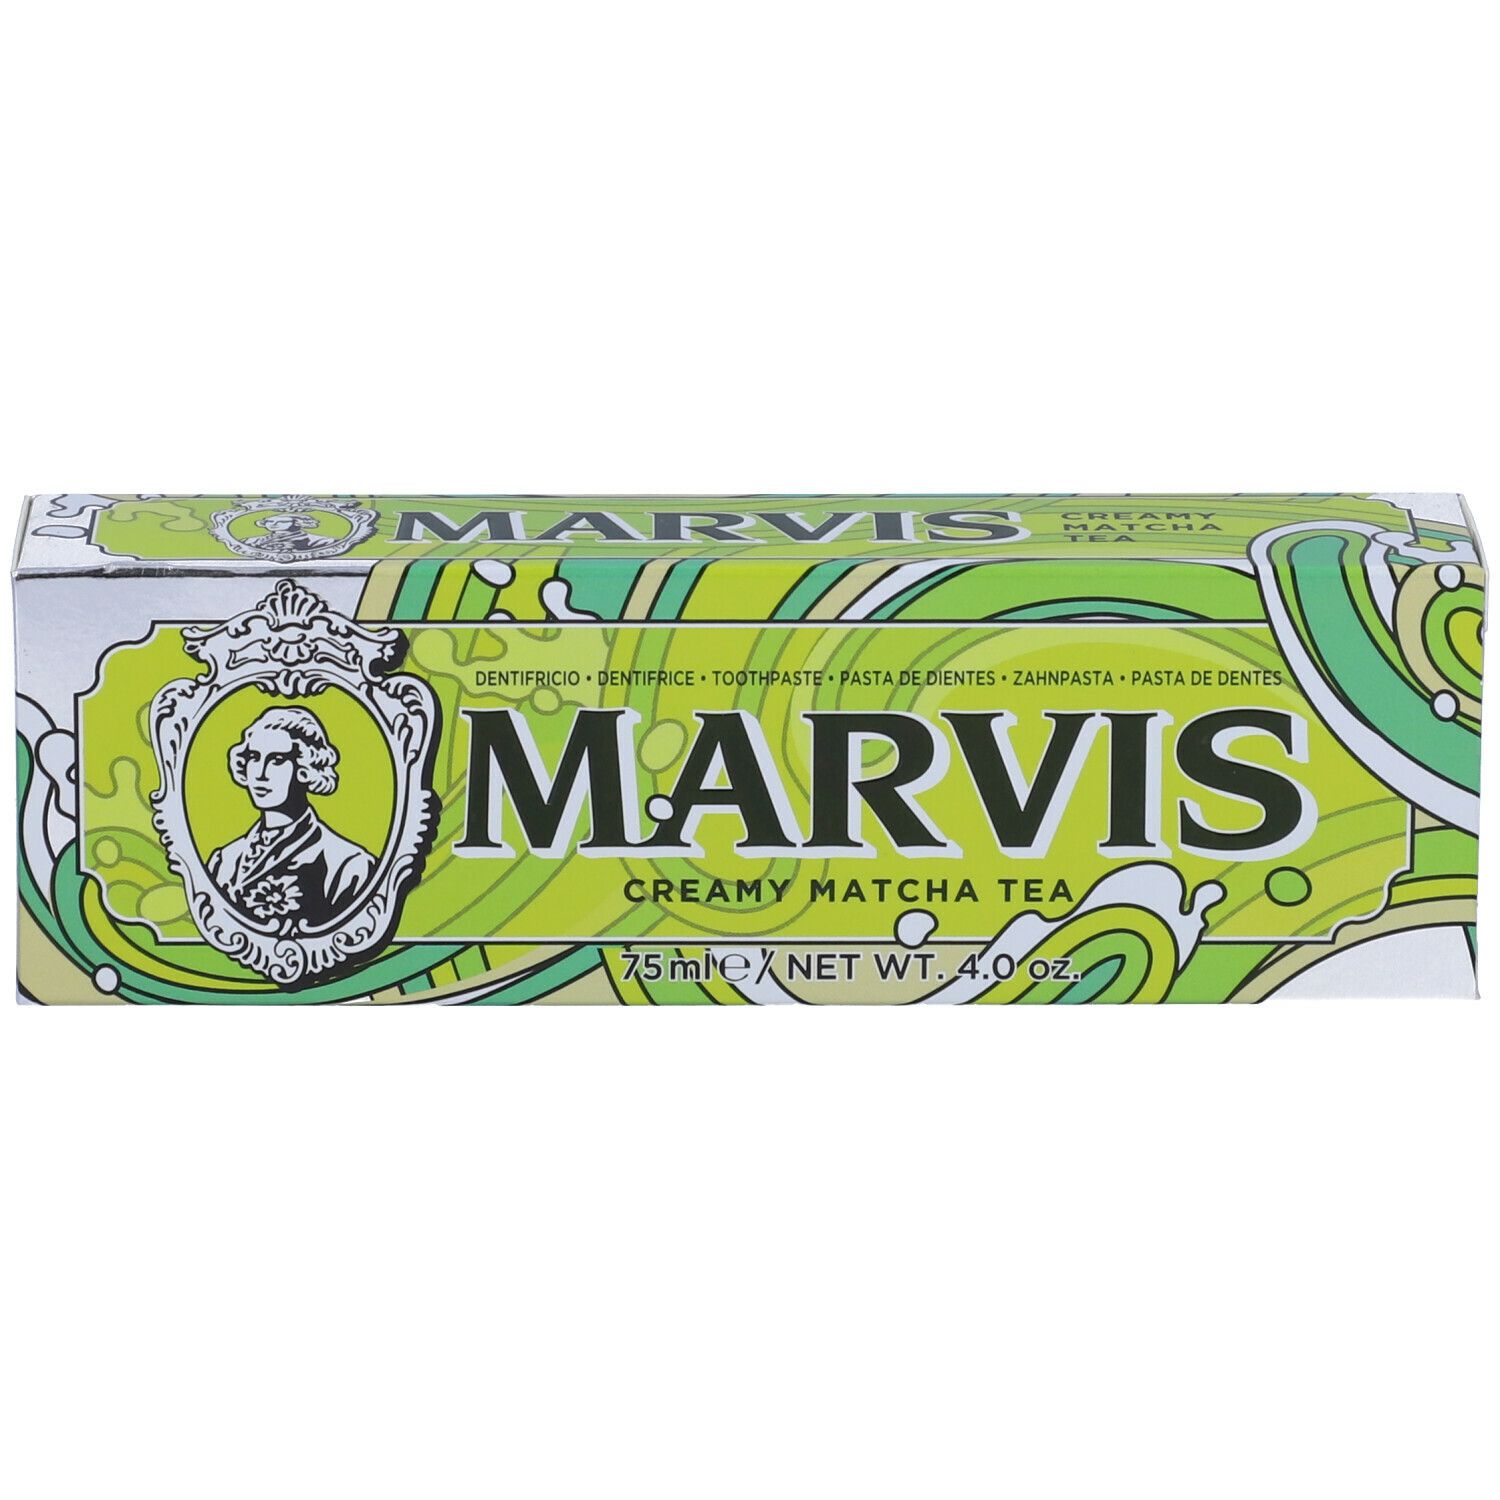 MARVIS Creamy Matcha Tea